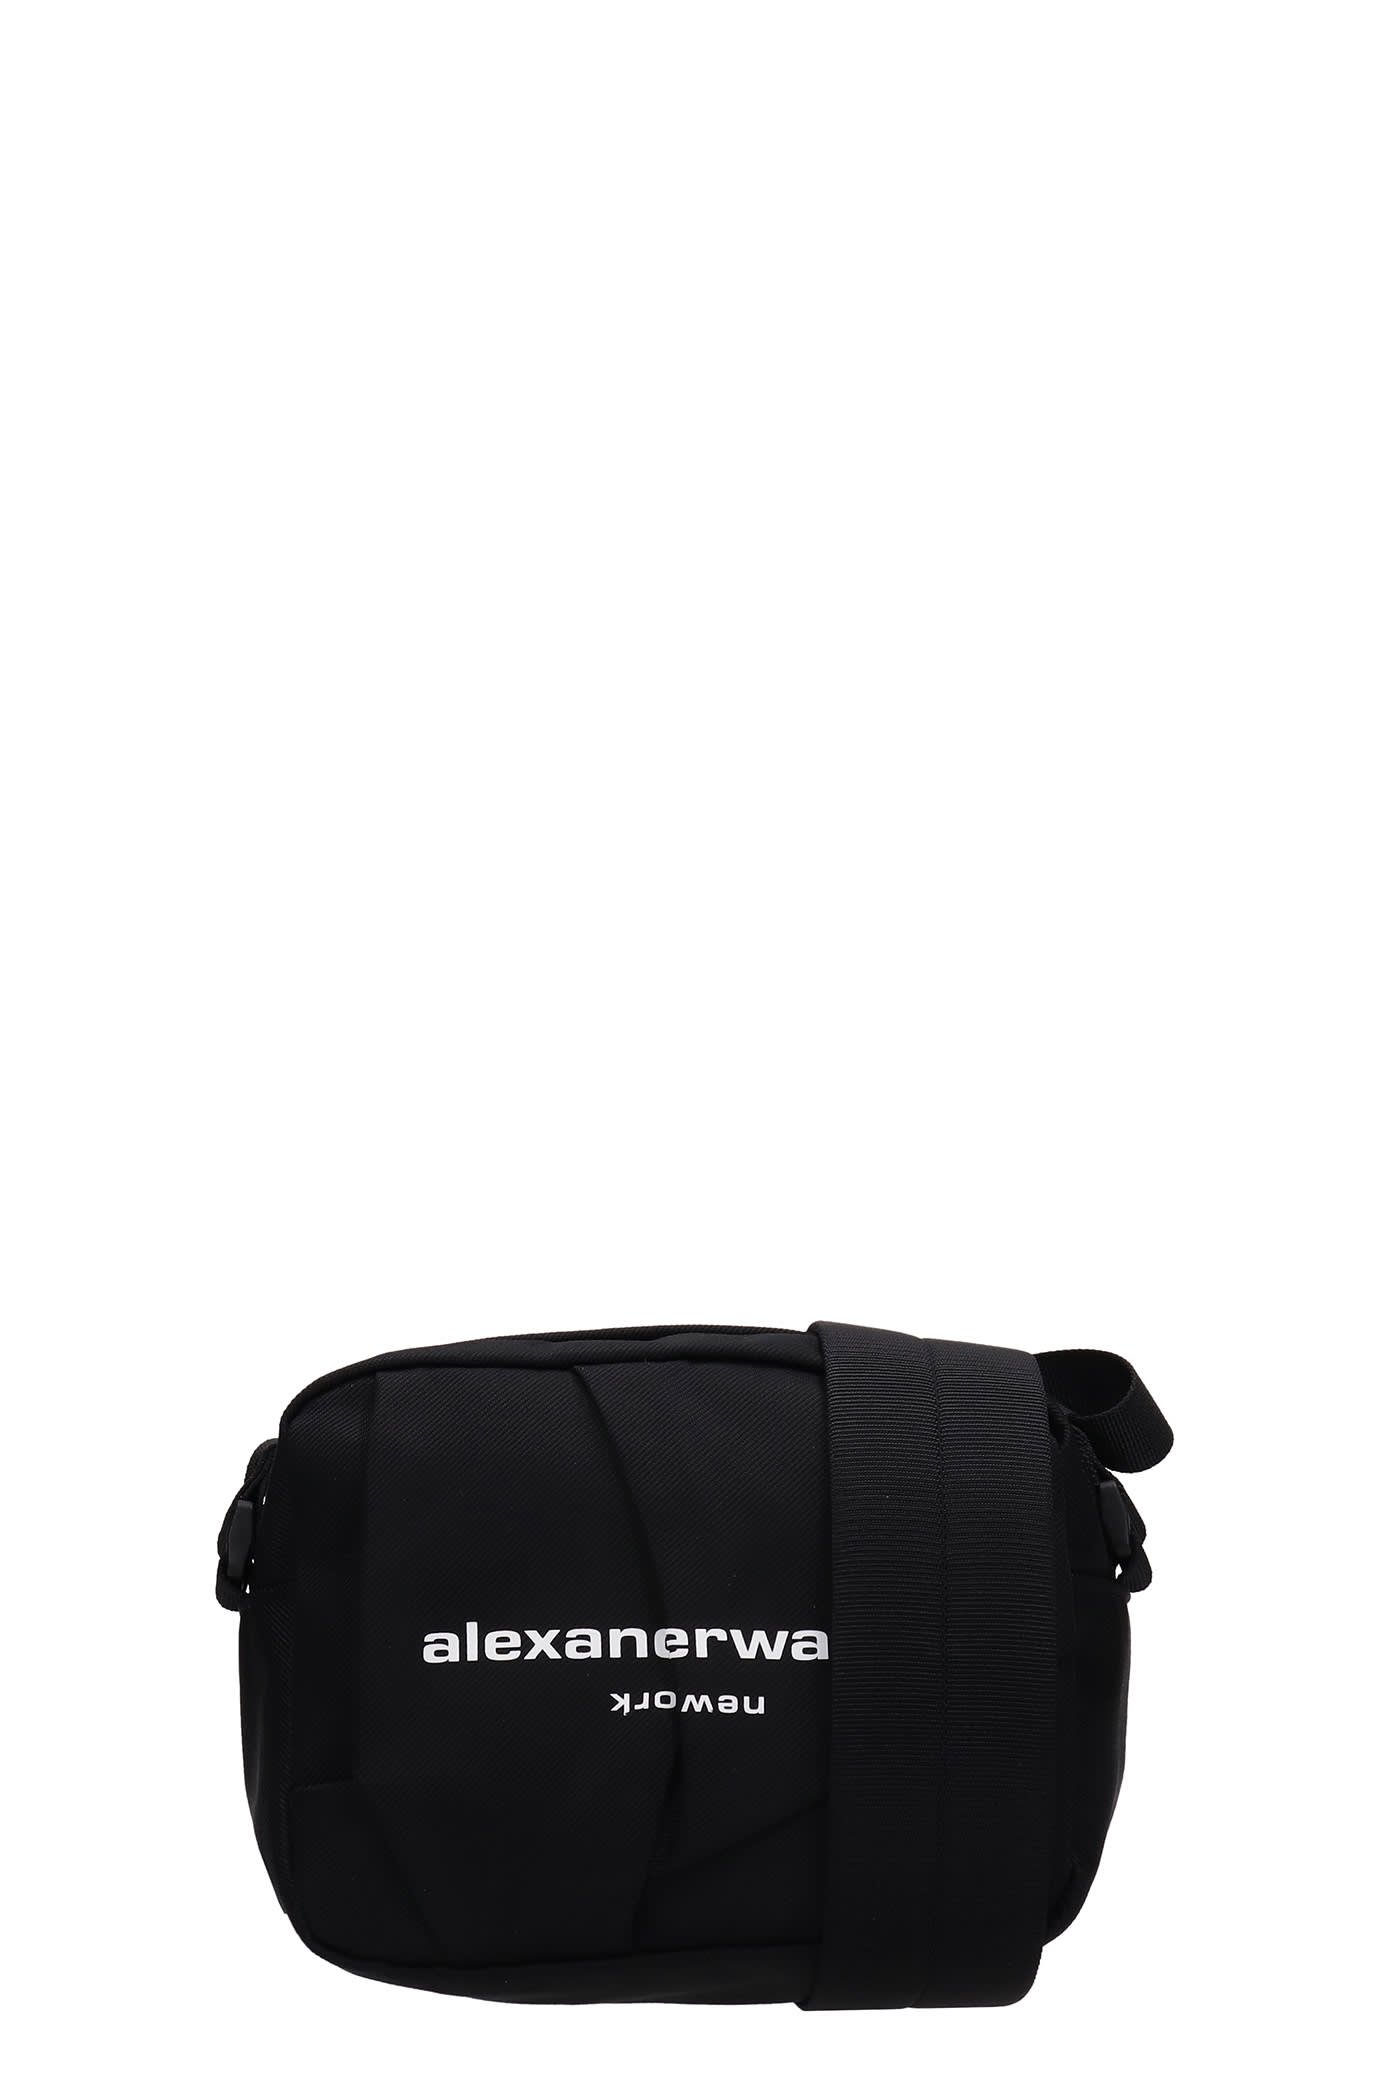 Alexander Wang Shoulder Bag In Black Nylon